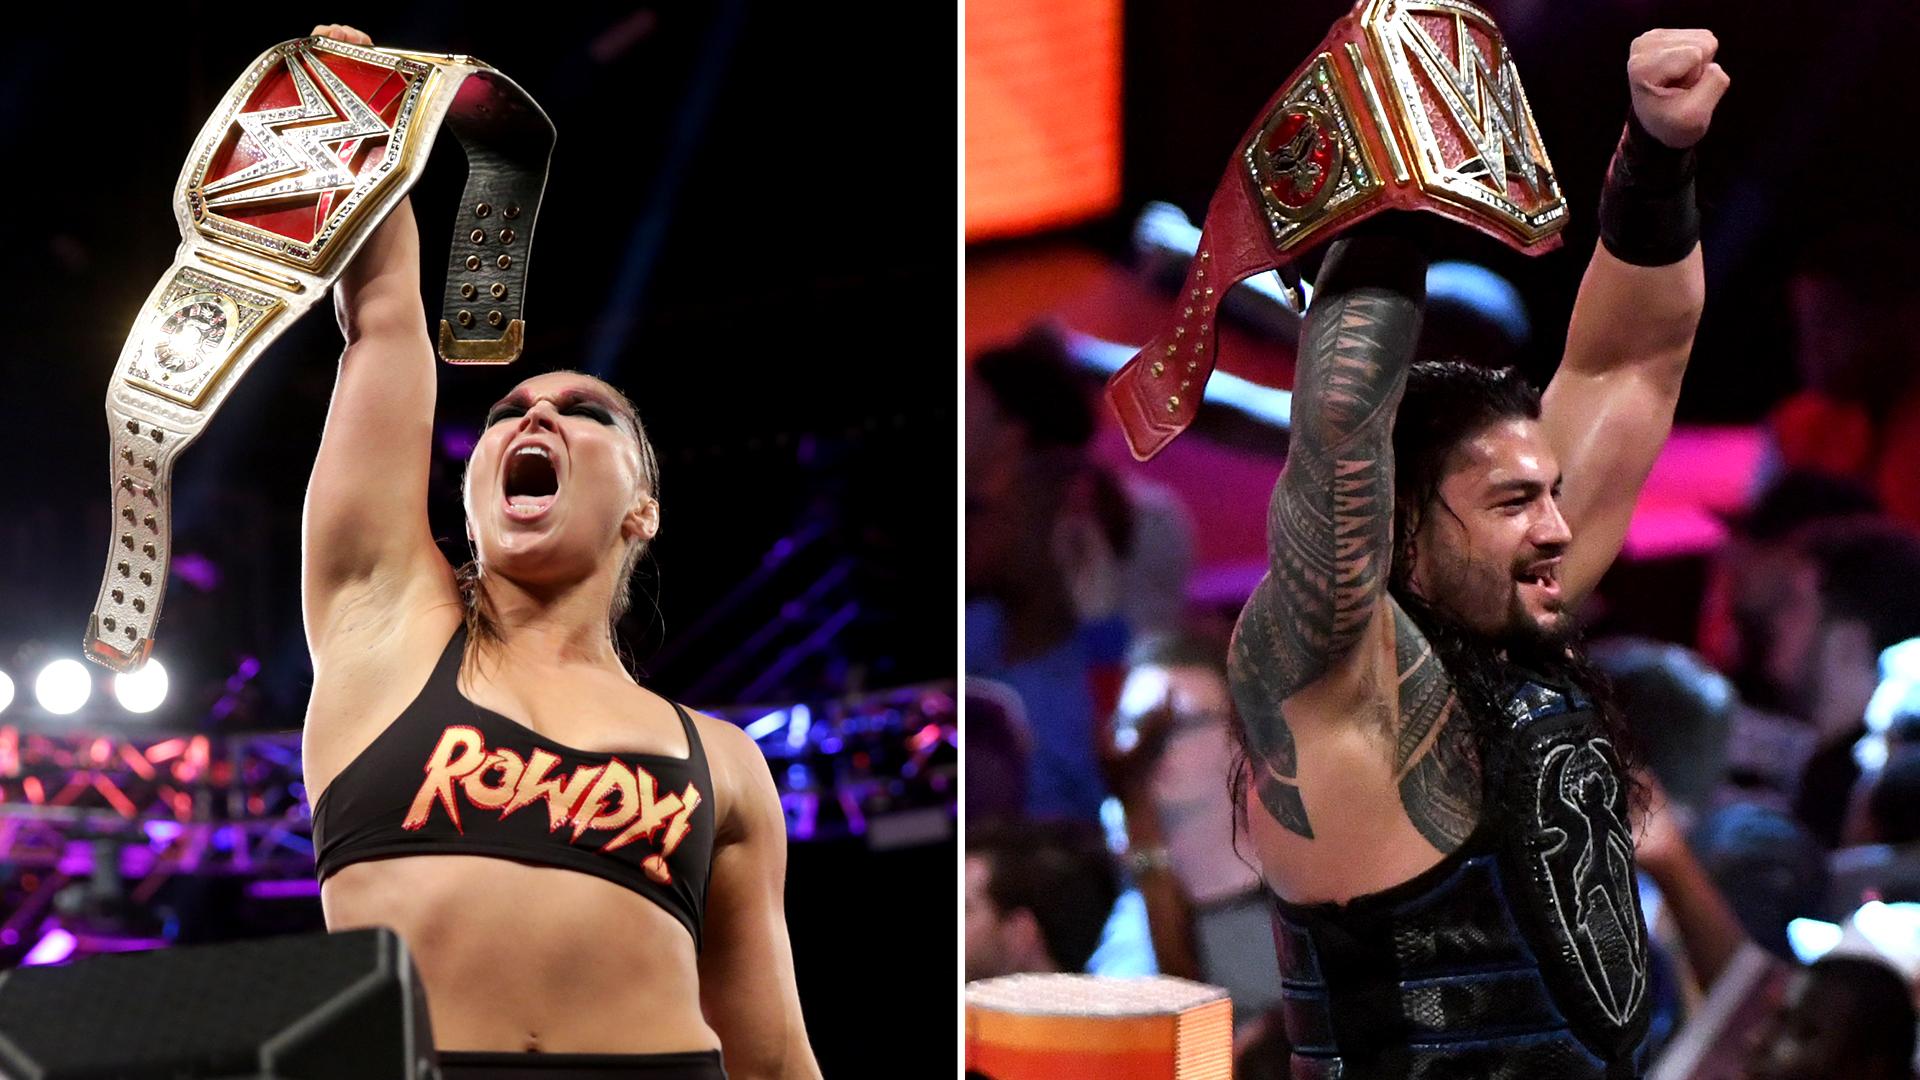 Ronda and Roman